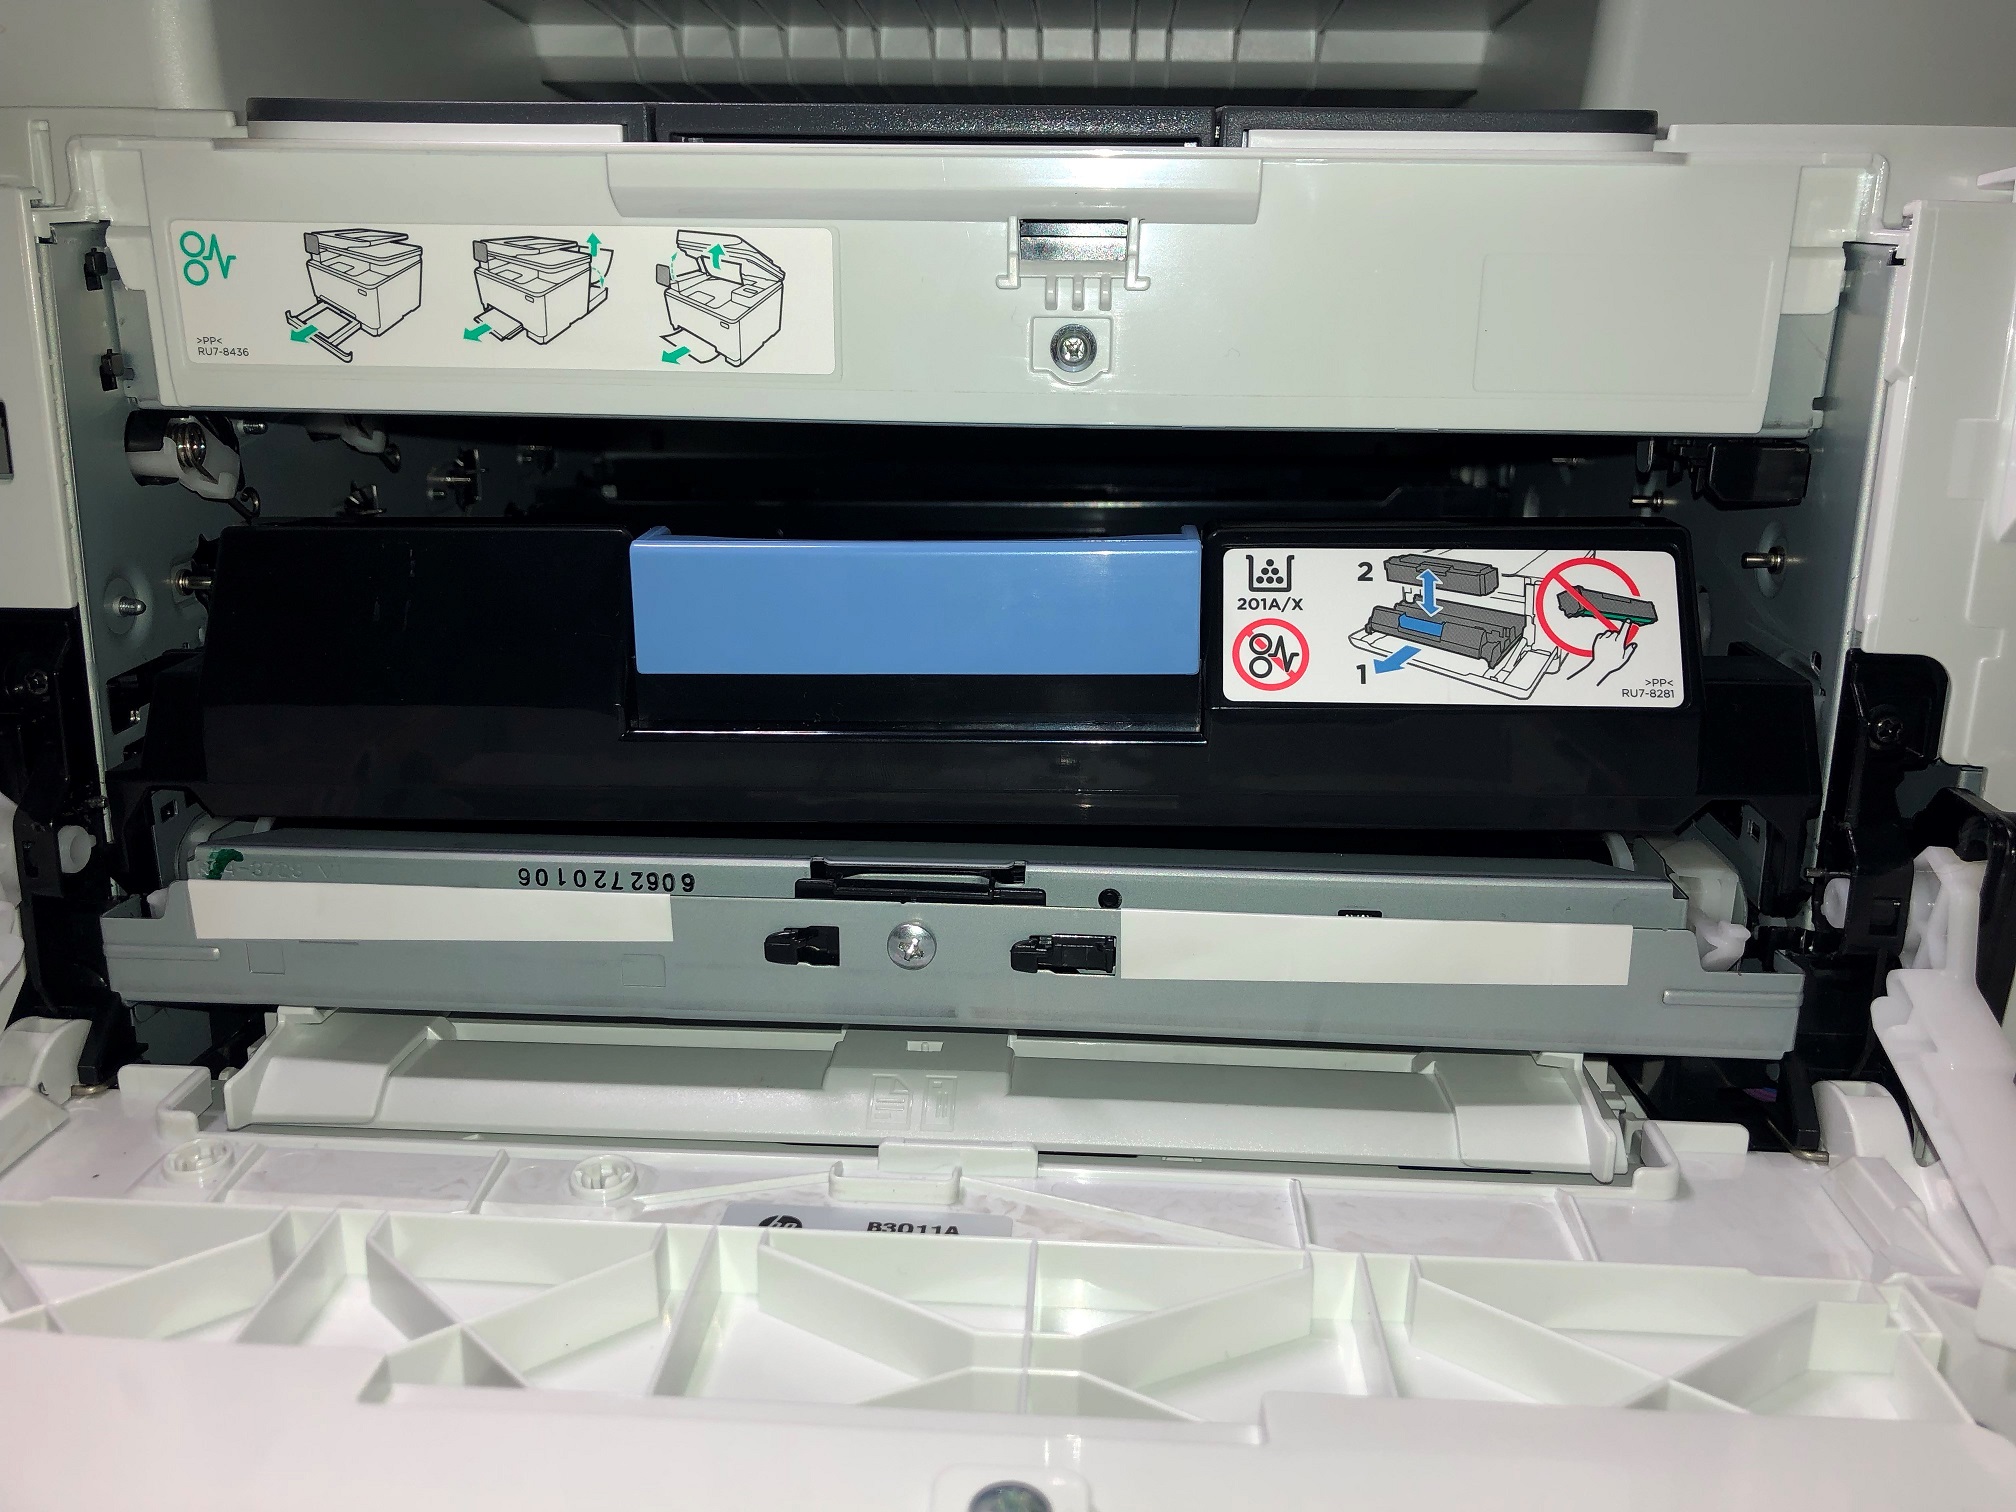 HP LaserJet Toner Cartridge tray won't go back in - HP Support Community -  6831537